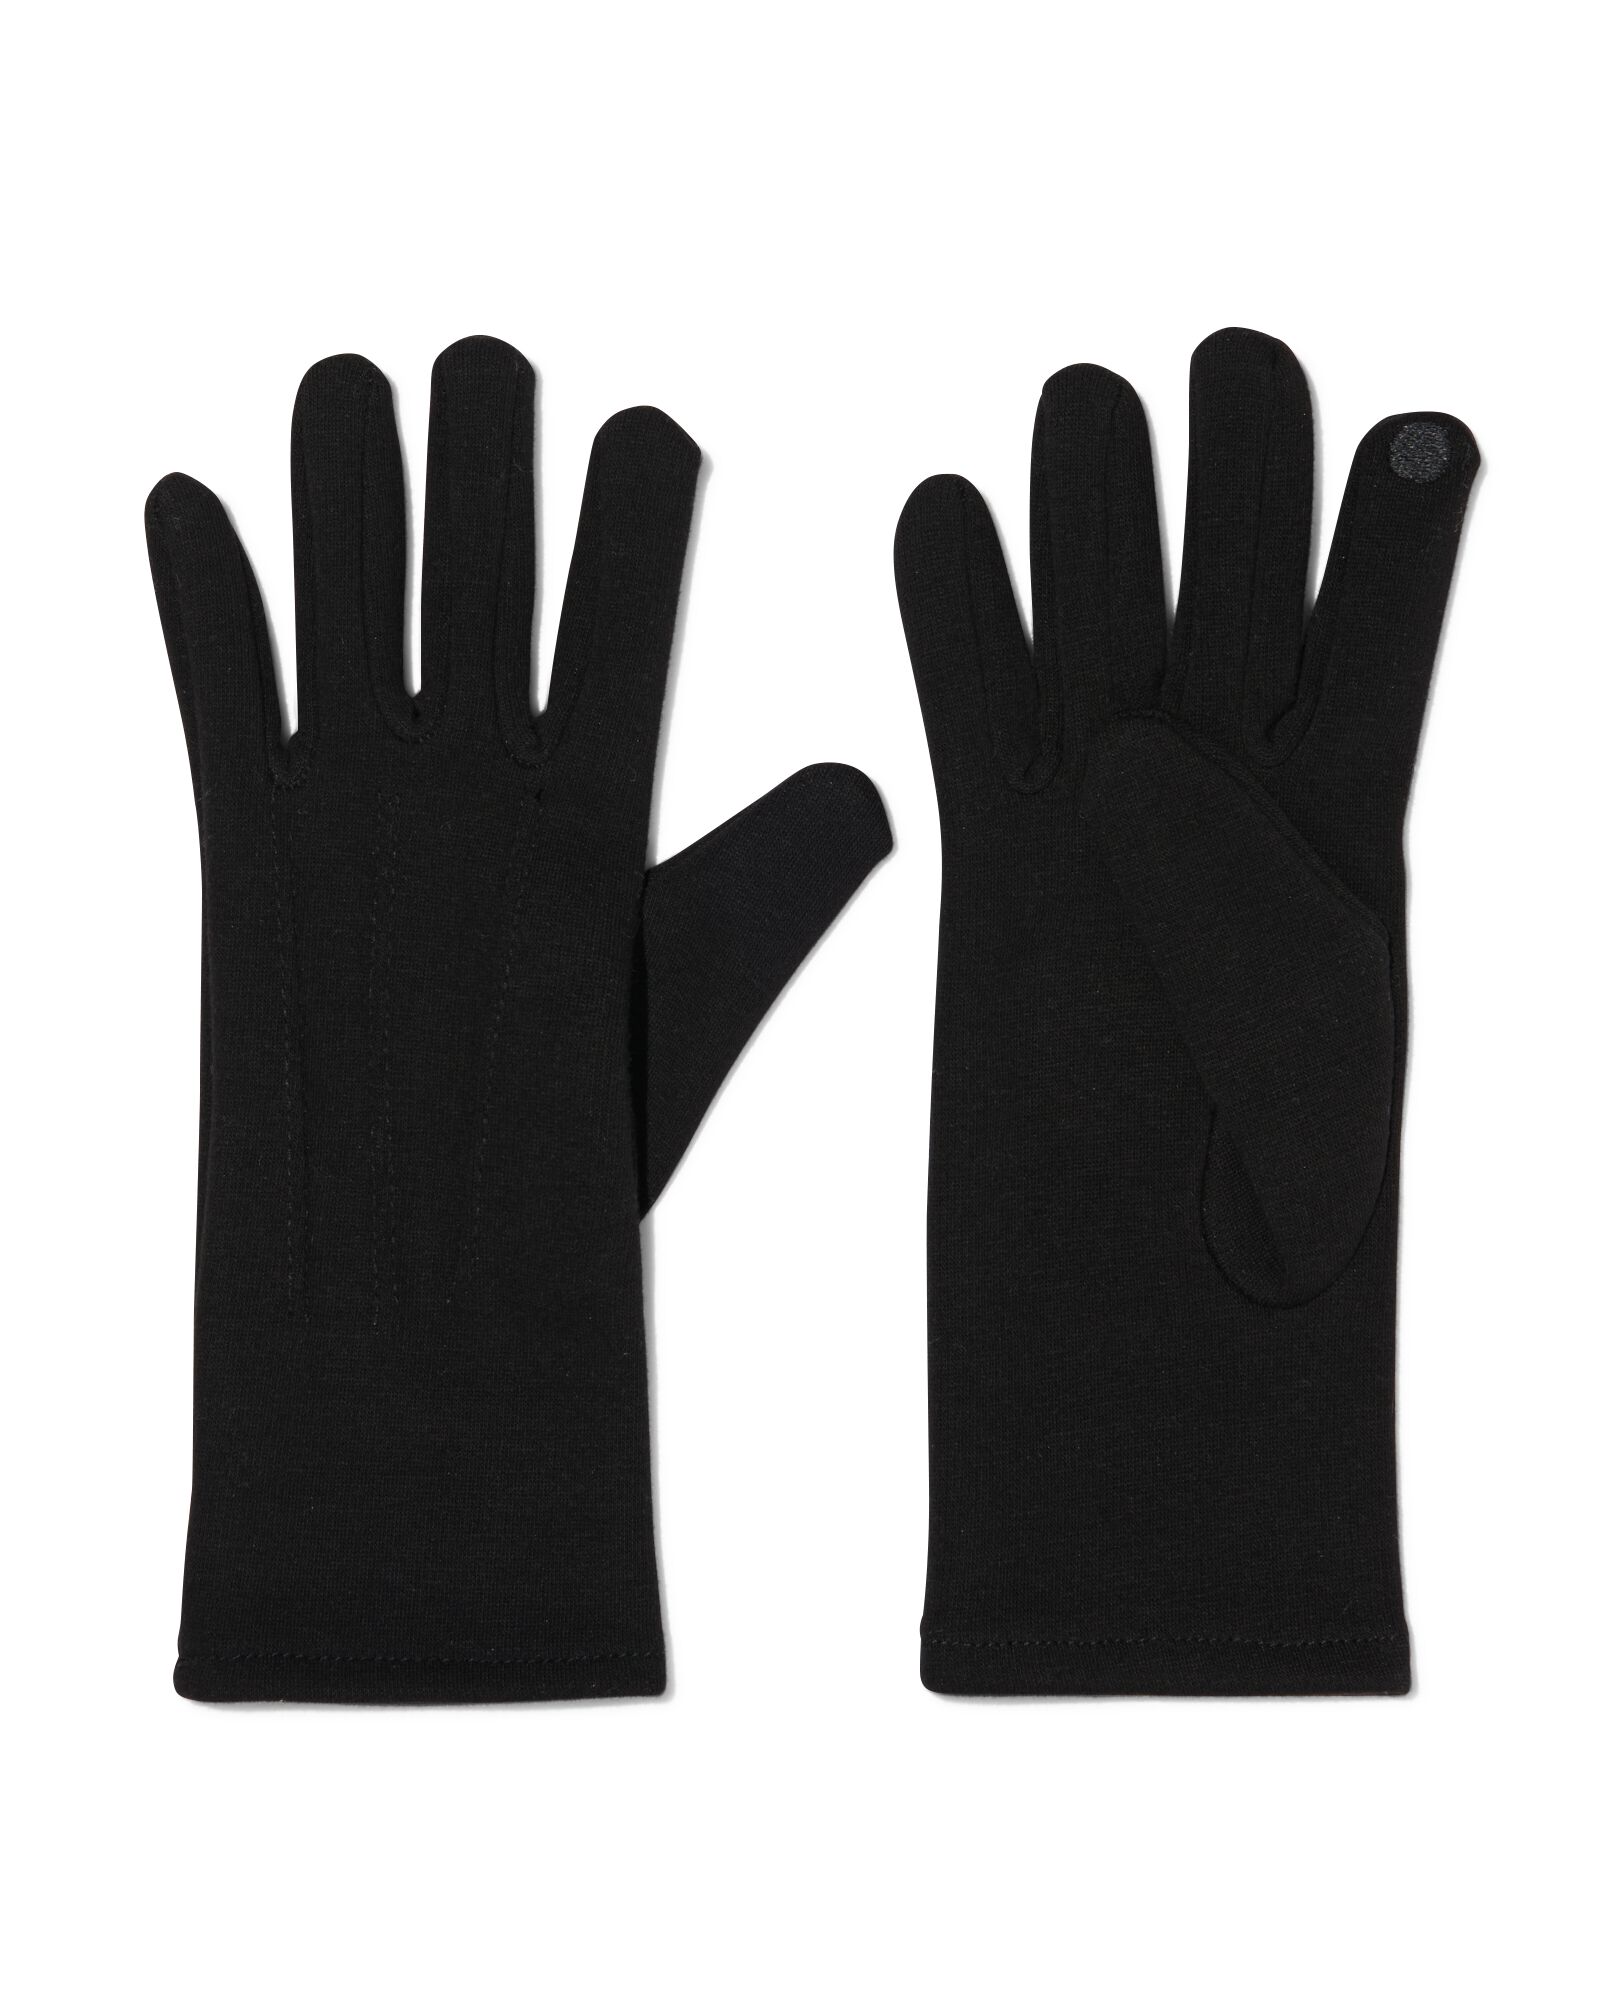 handschoenen touchscreen zwart S/M - 16460176 - HEMA